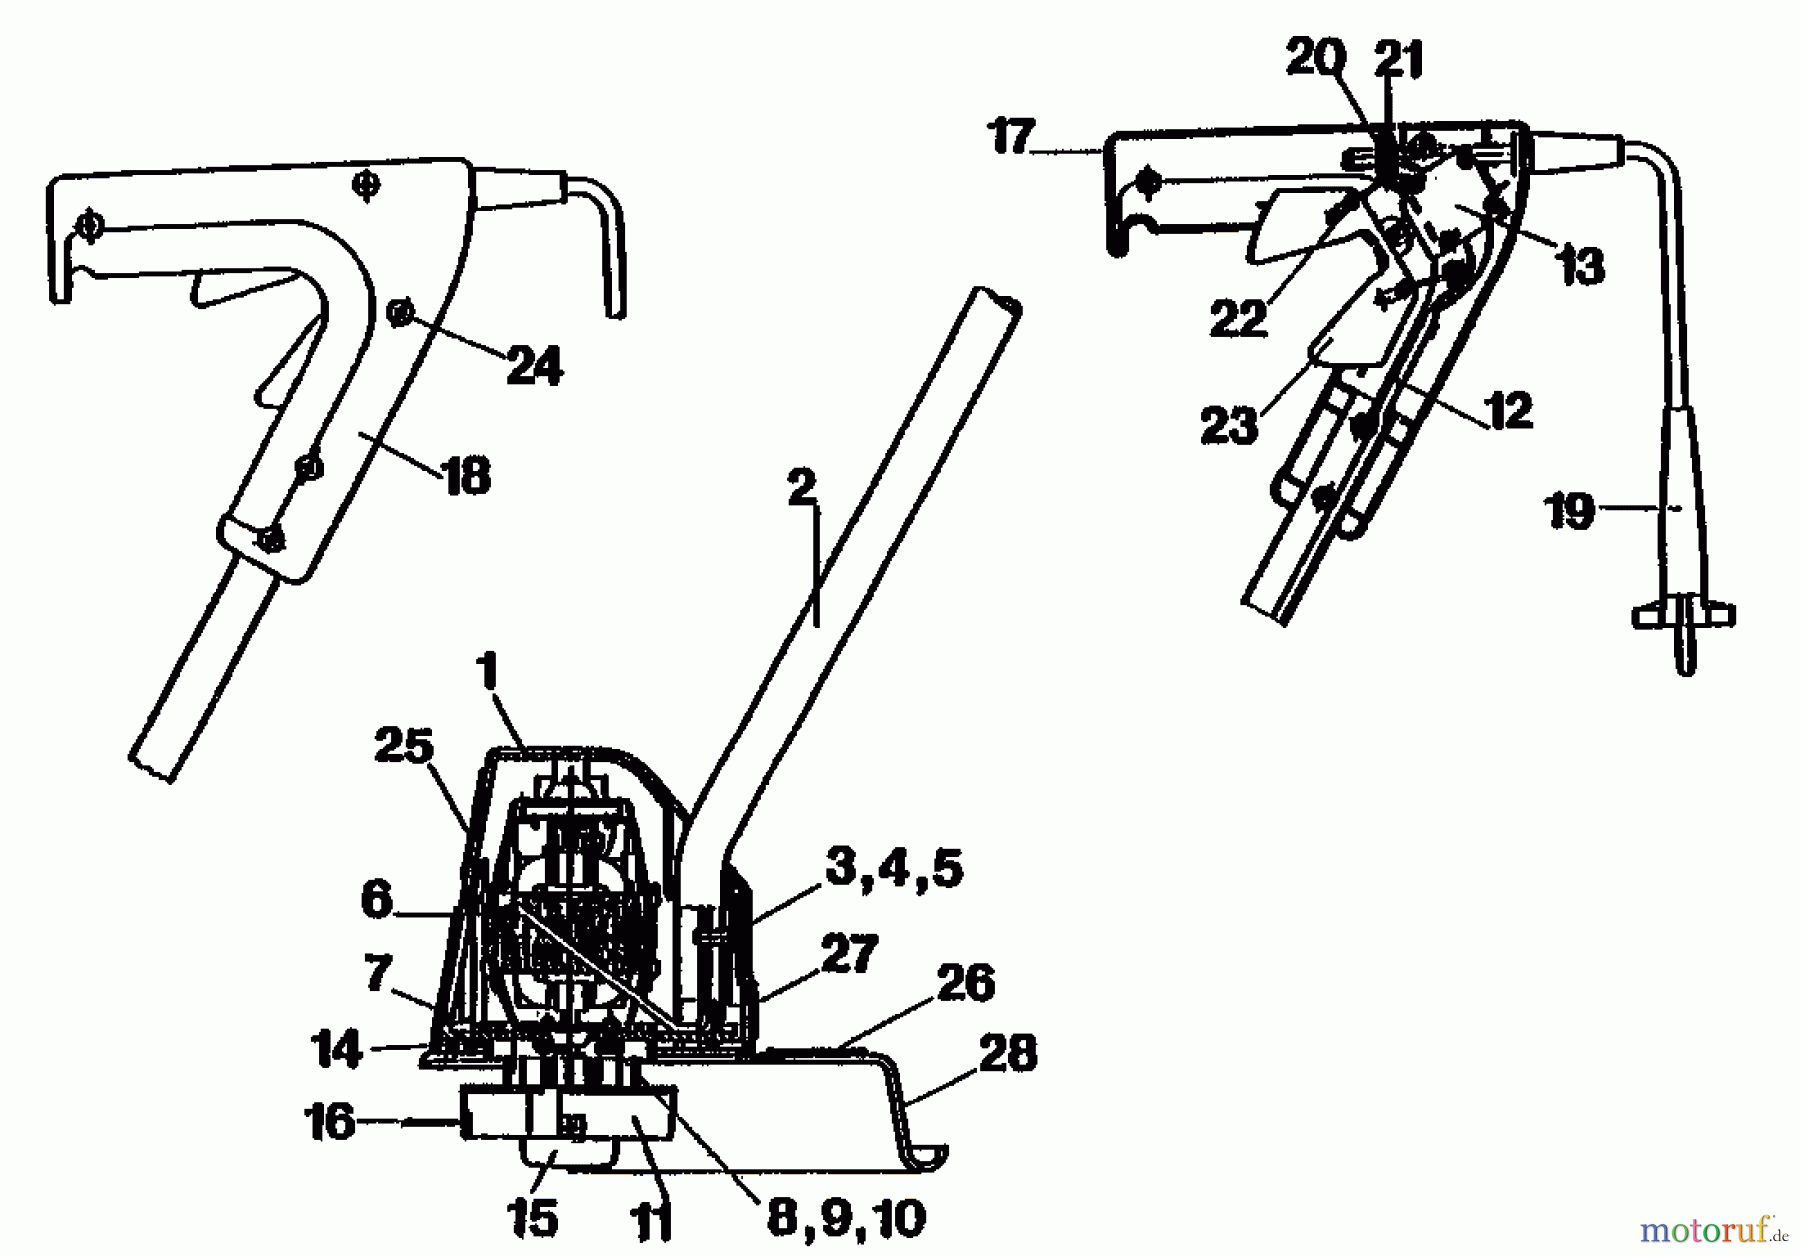  Golf Electric trimmer 420 RAPS 02811.01  (1991) Basic machine